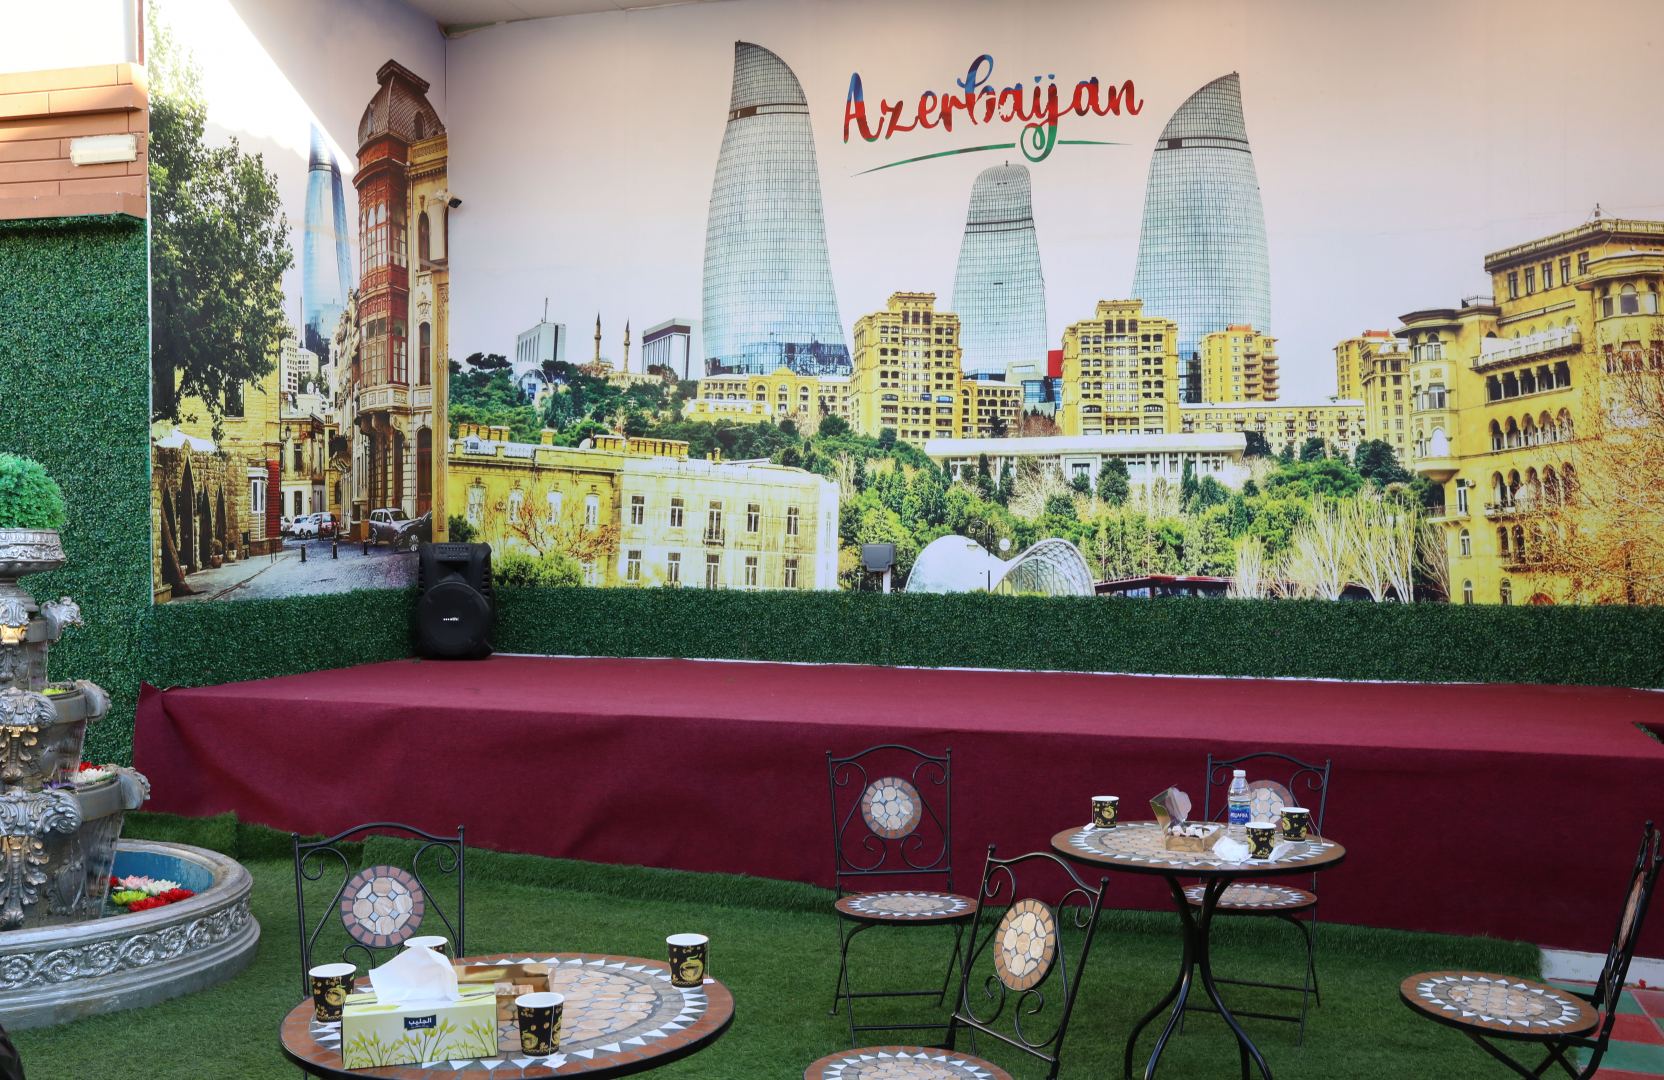 Azerbaijani products at international fair in Dubai (PHOTOS)